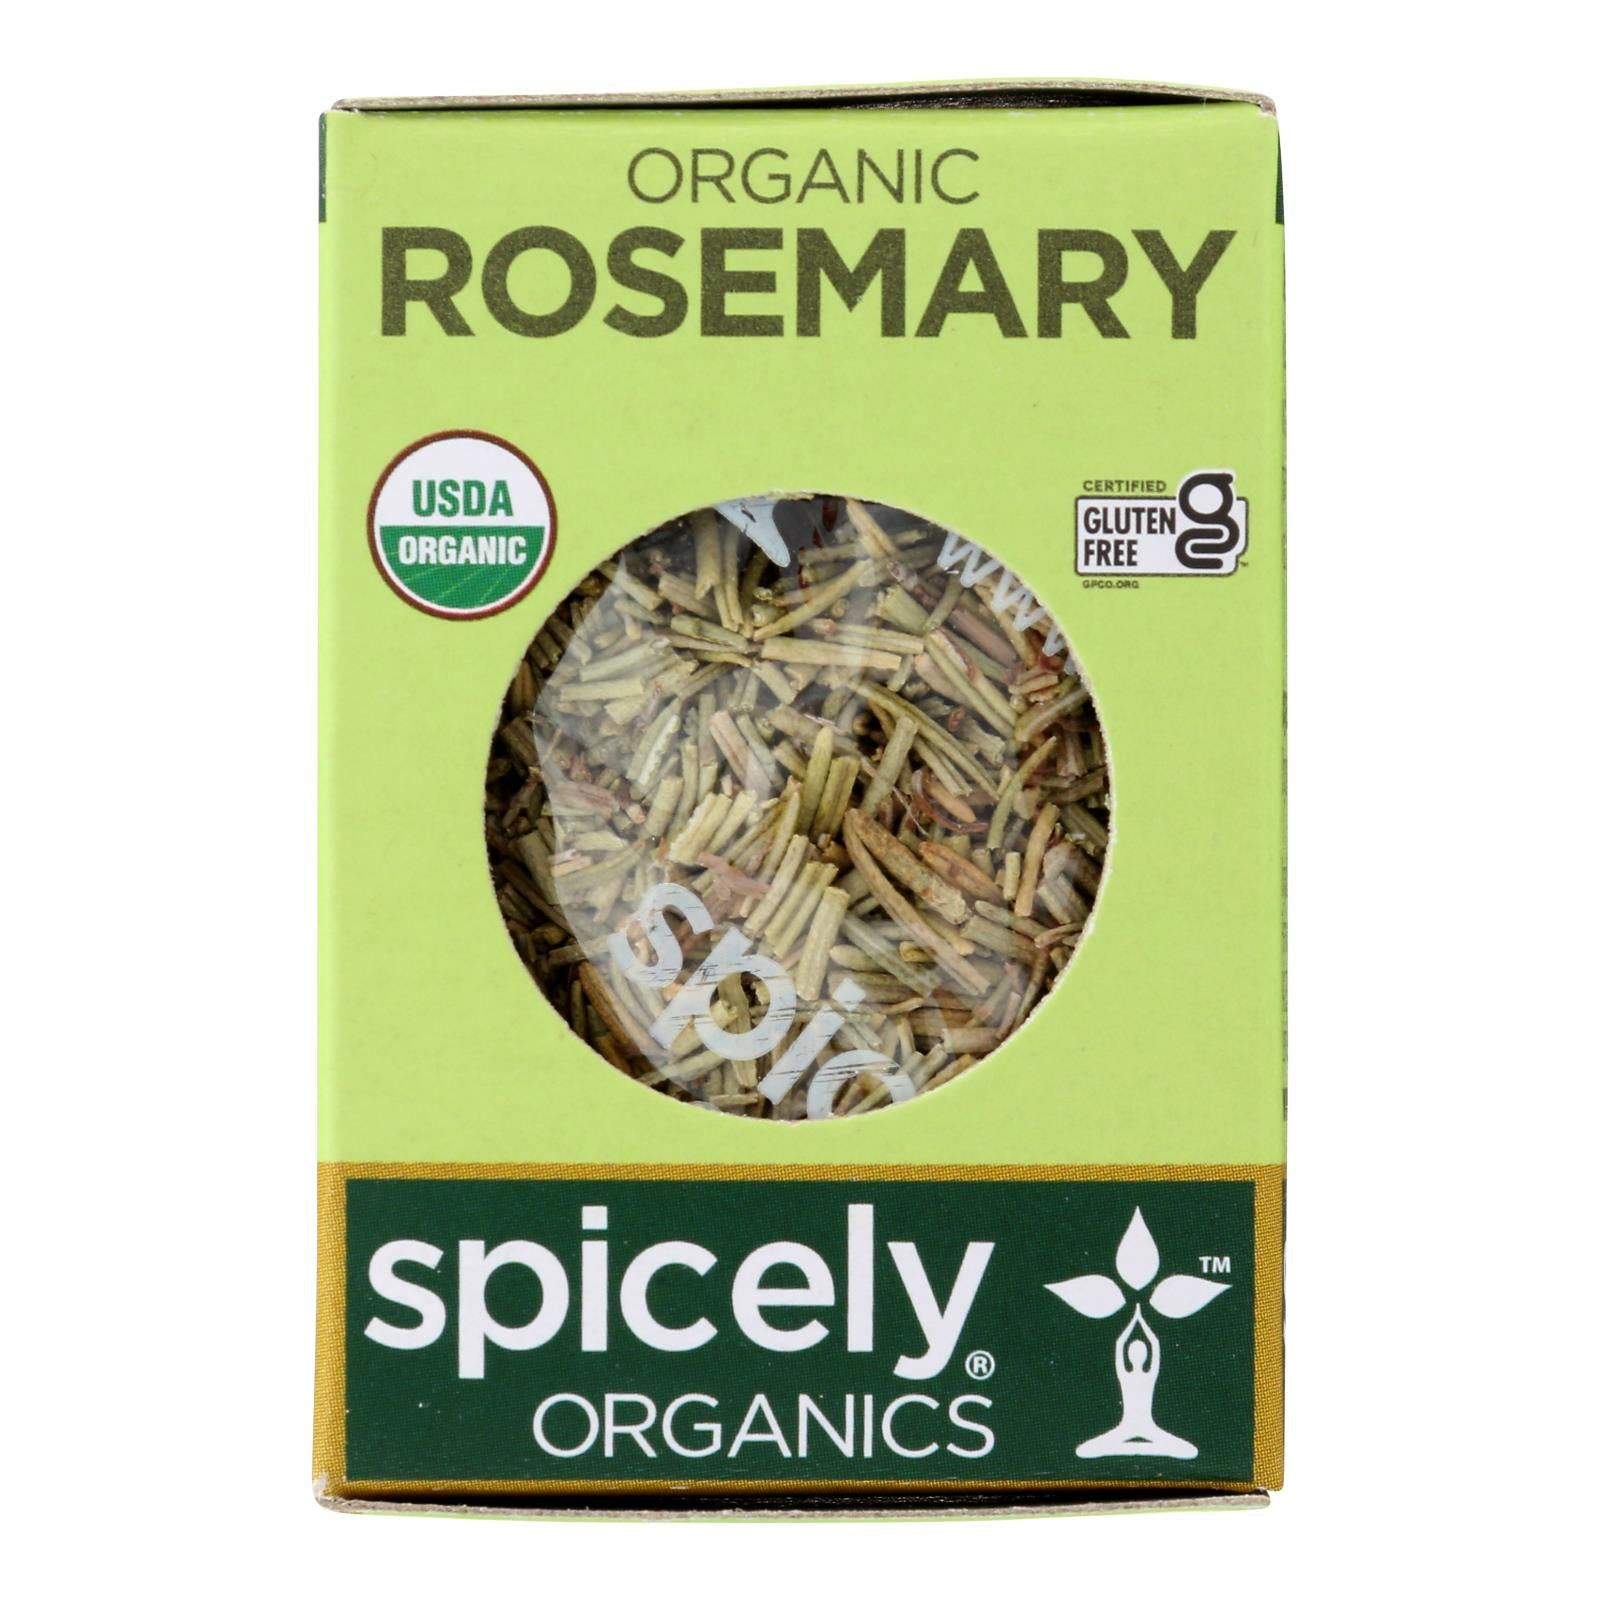 Spicely Organics - Organic Rosemary - Whole - Case of 6 - 0.2 oz.